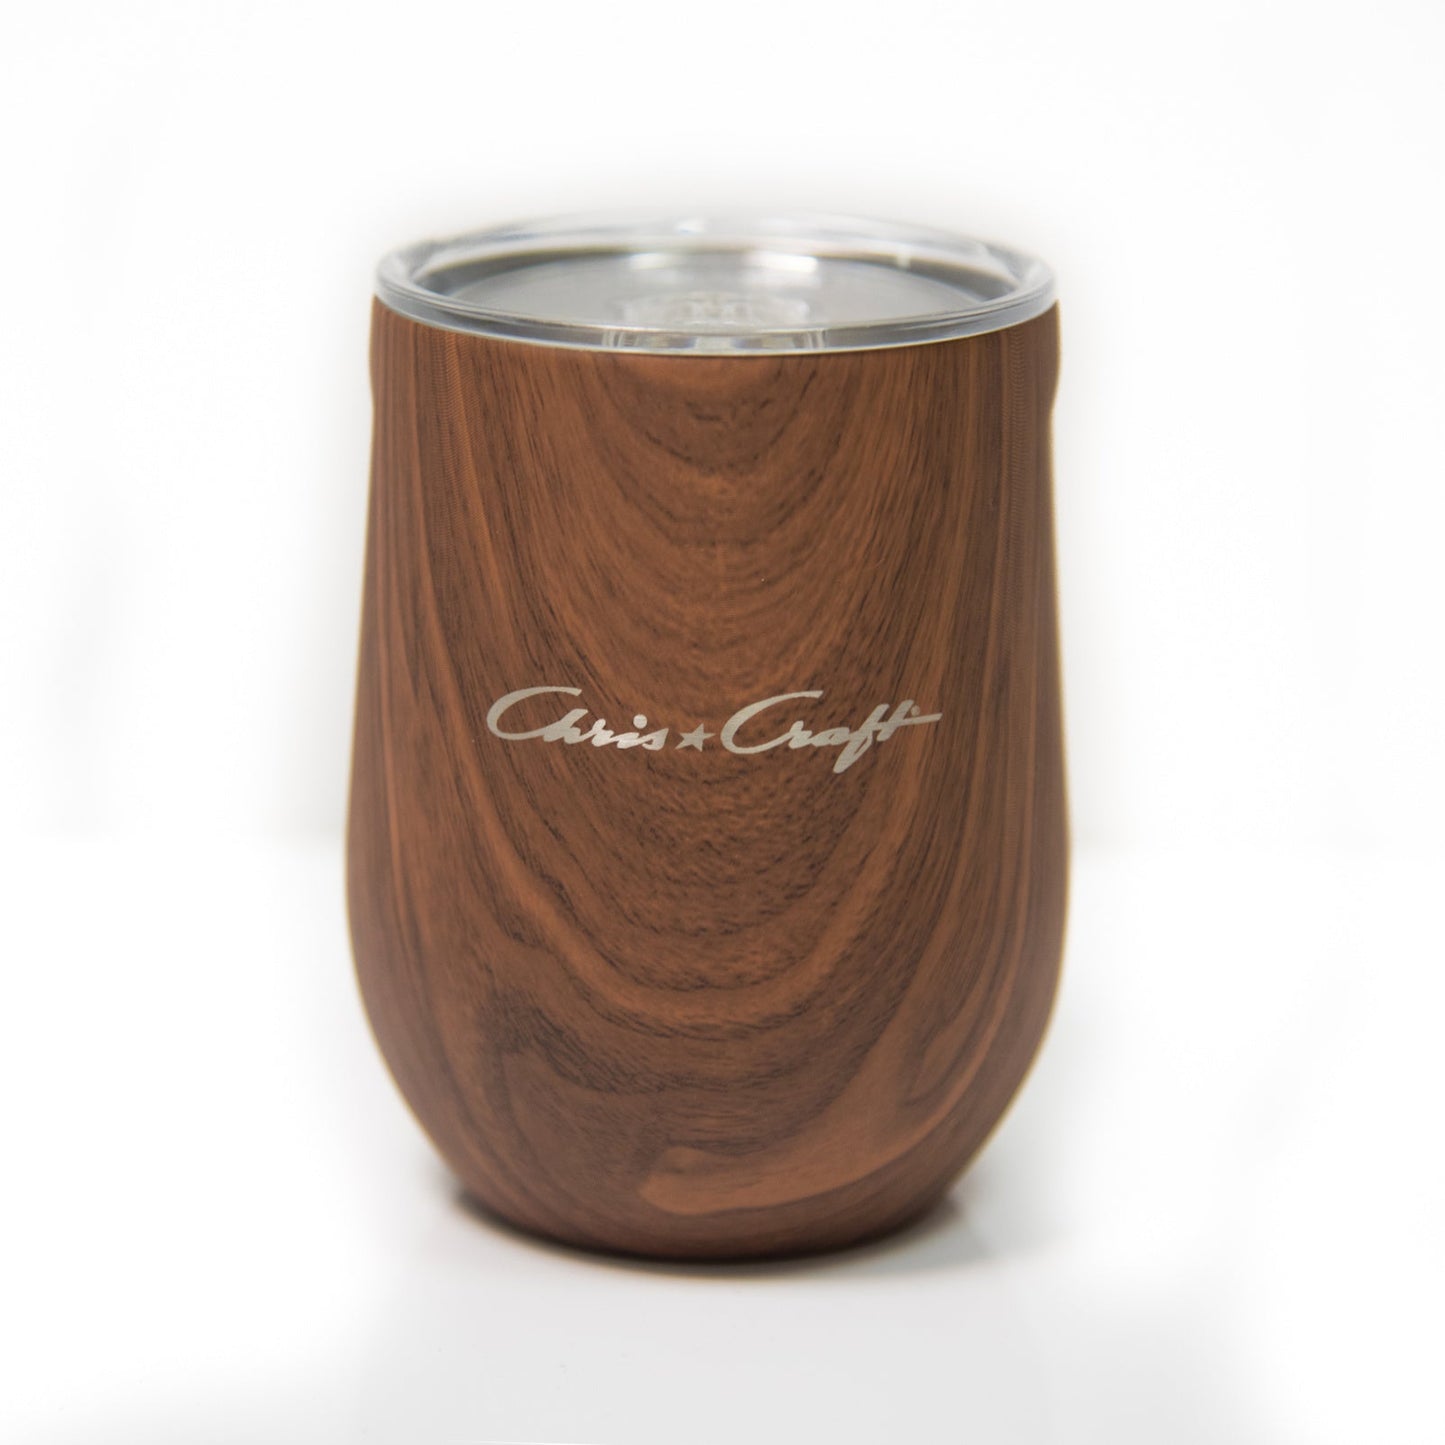 Chris-Craft Corkcicle 12 oz. Stemless Cup - Walnut Wood